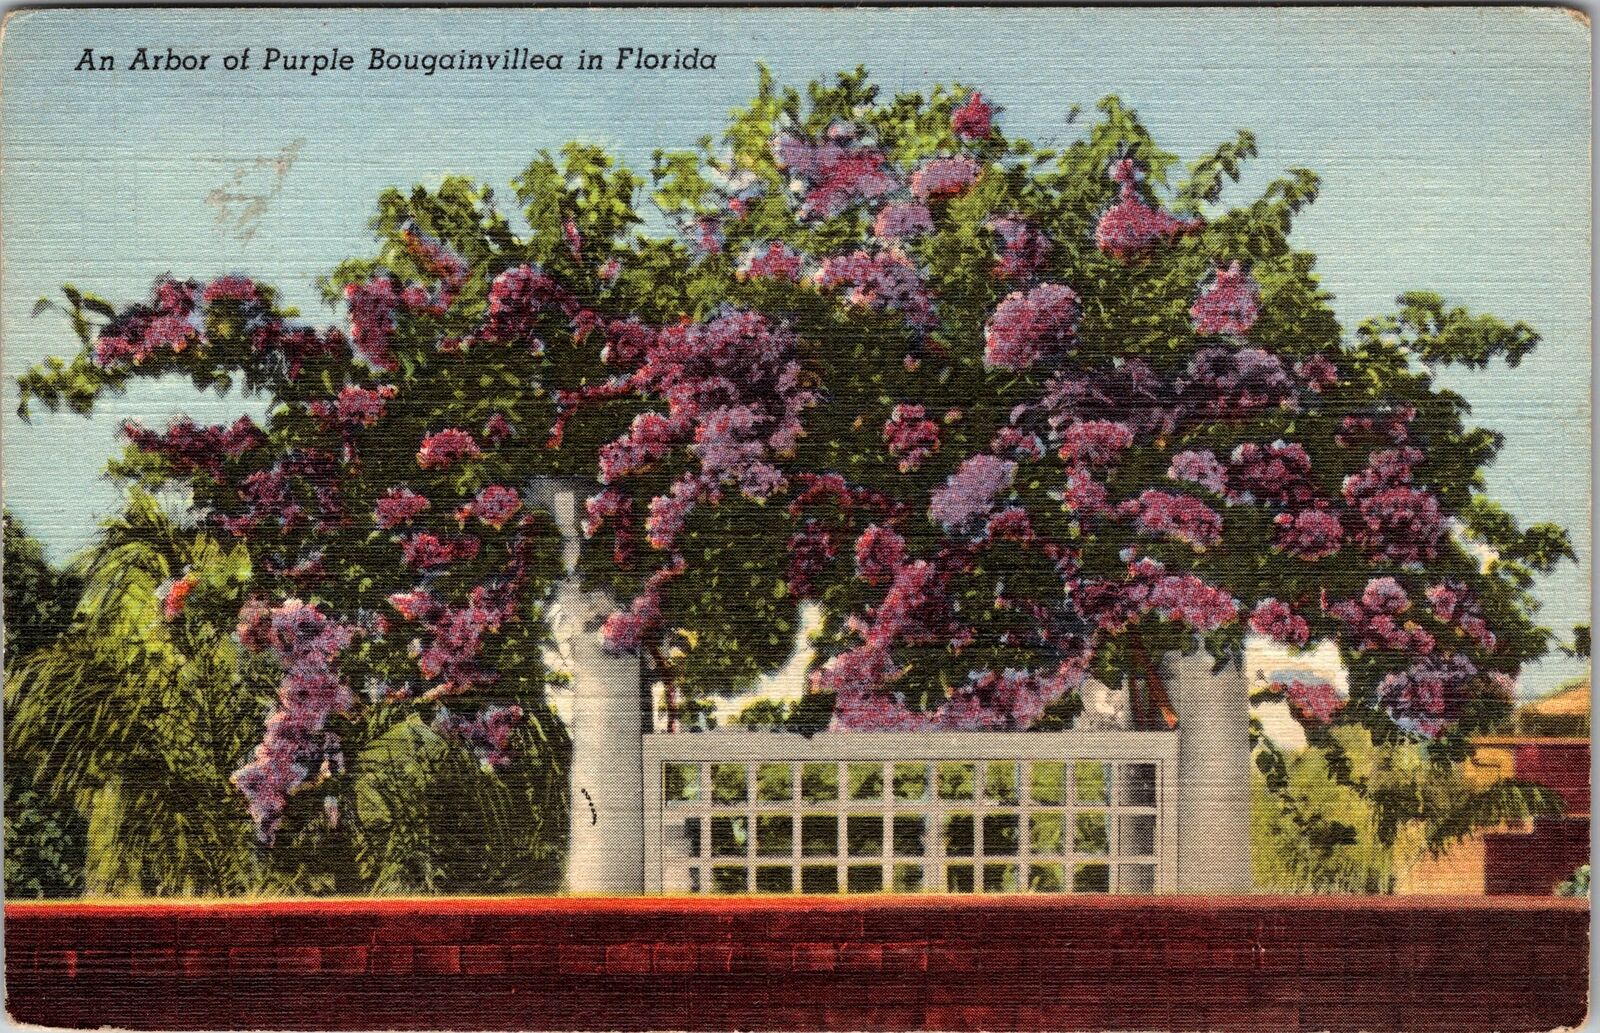 FL-Florida, An Arbor Of Purple Bougainvillea, c1950 Vintage Souvenir Postcard